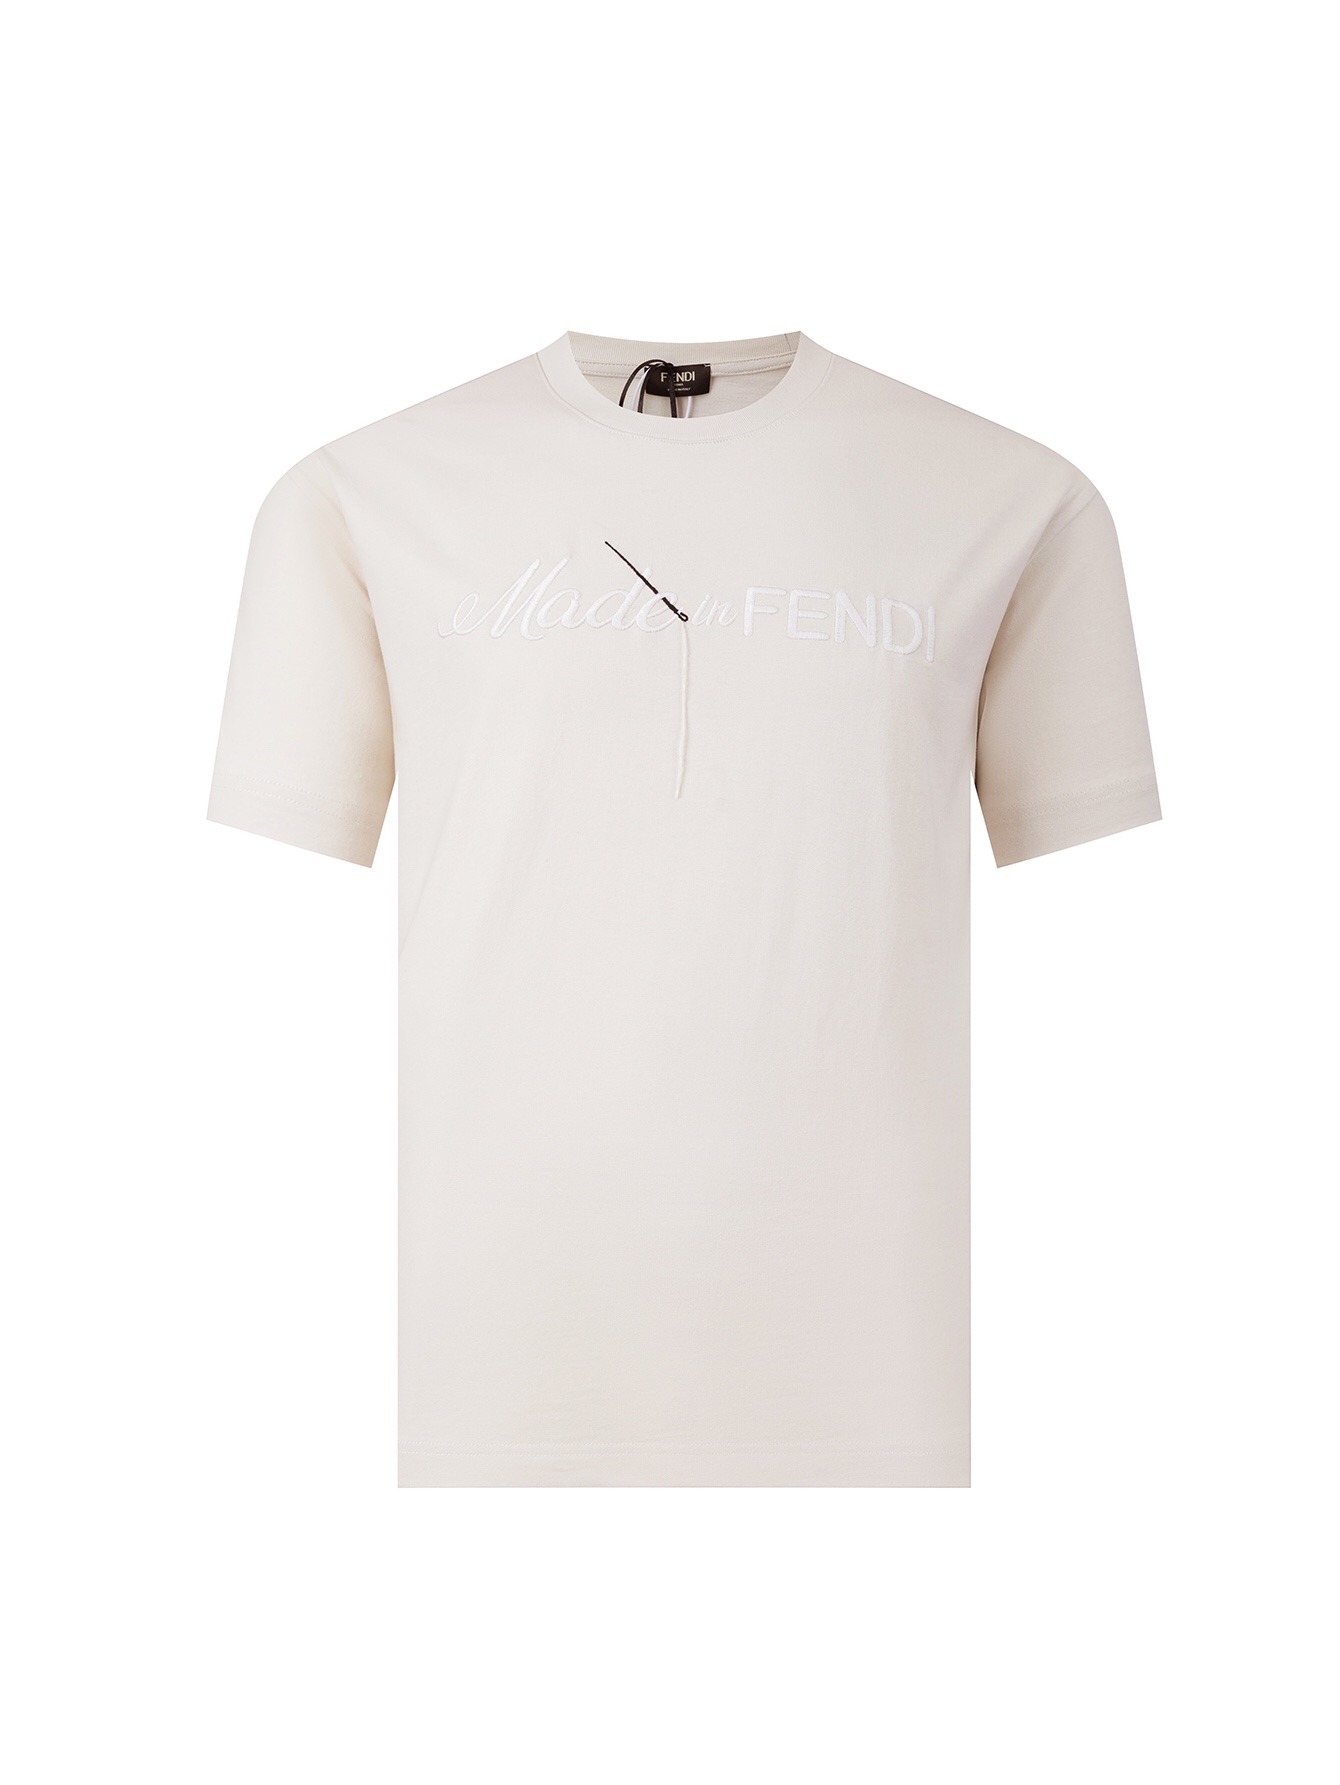 Fendi Clothing T-Shirt Apricot Color Embroidery Unisex Short Sleeve